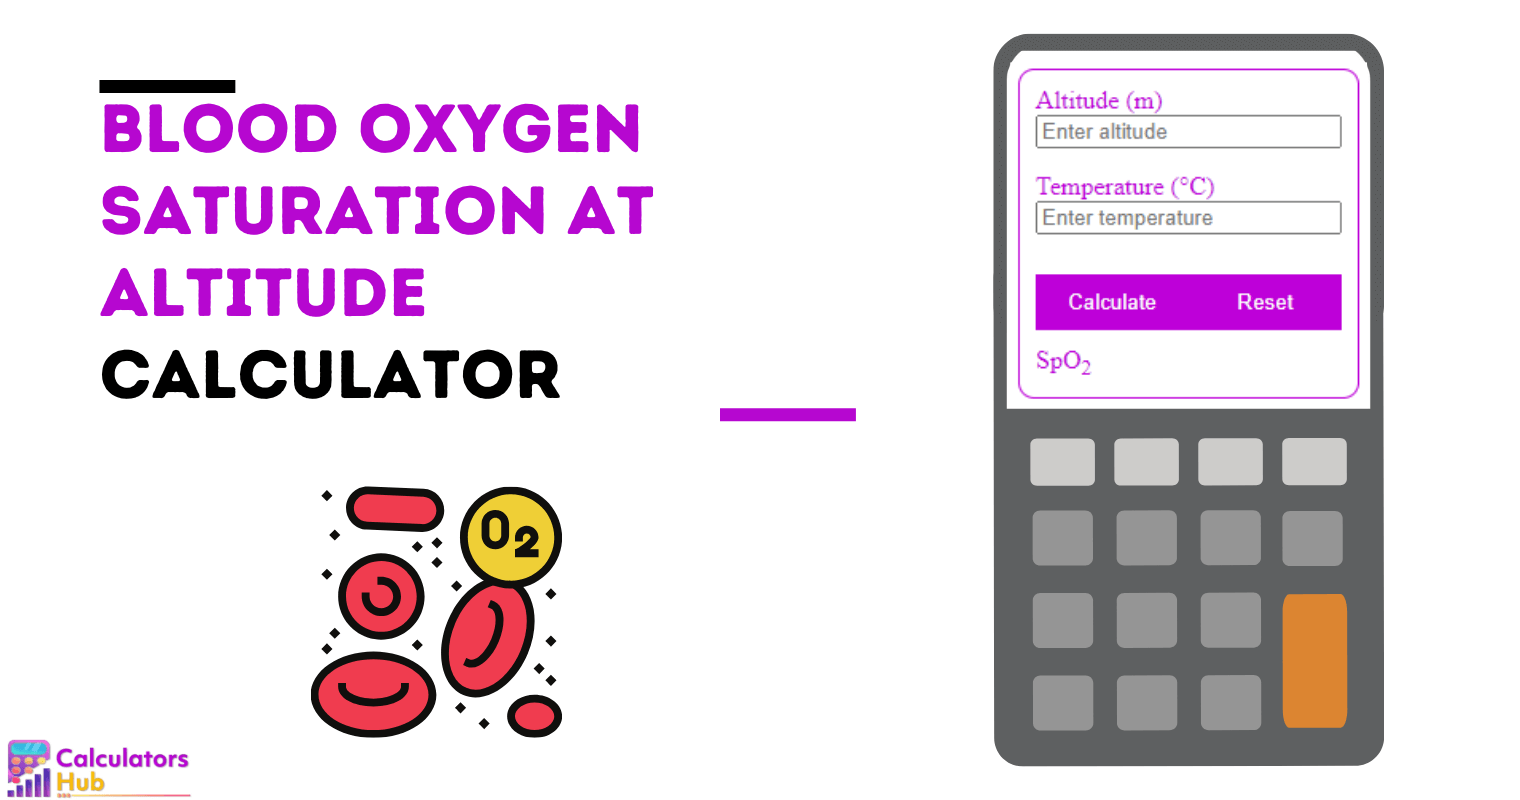 Blood Oxygen Saturation at Altitude calculator